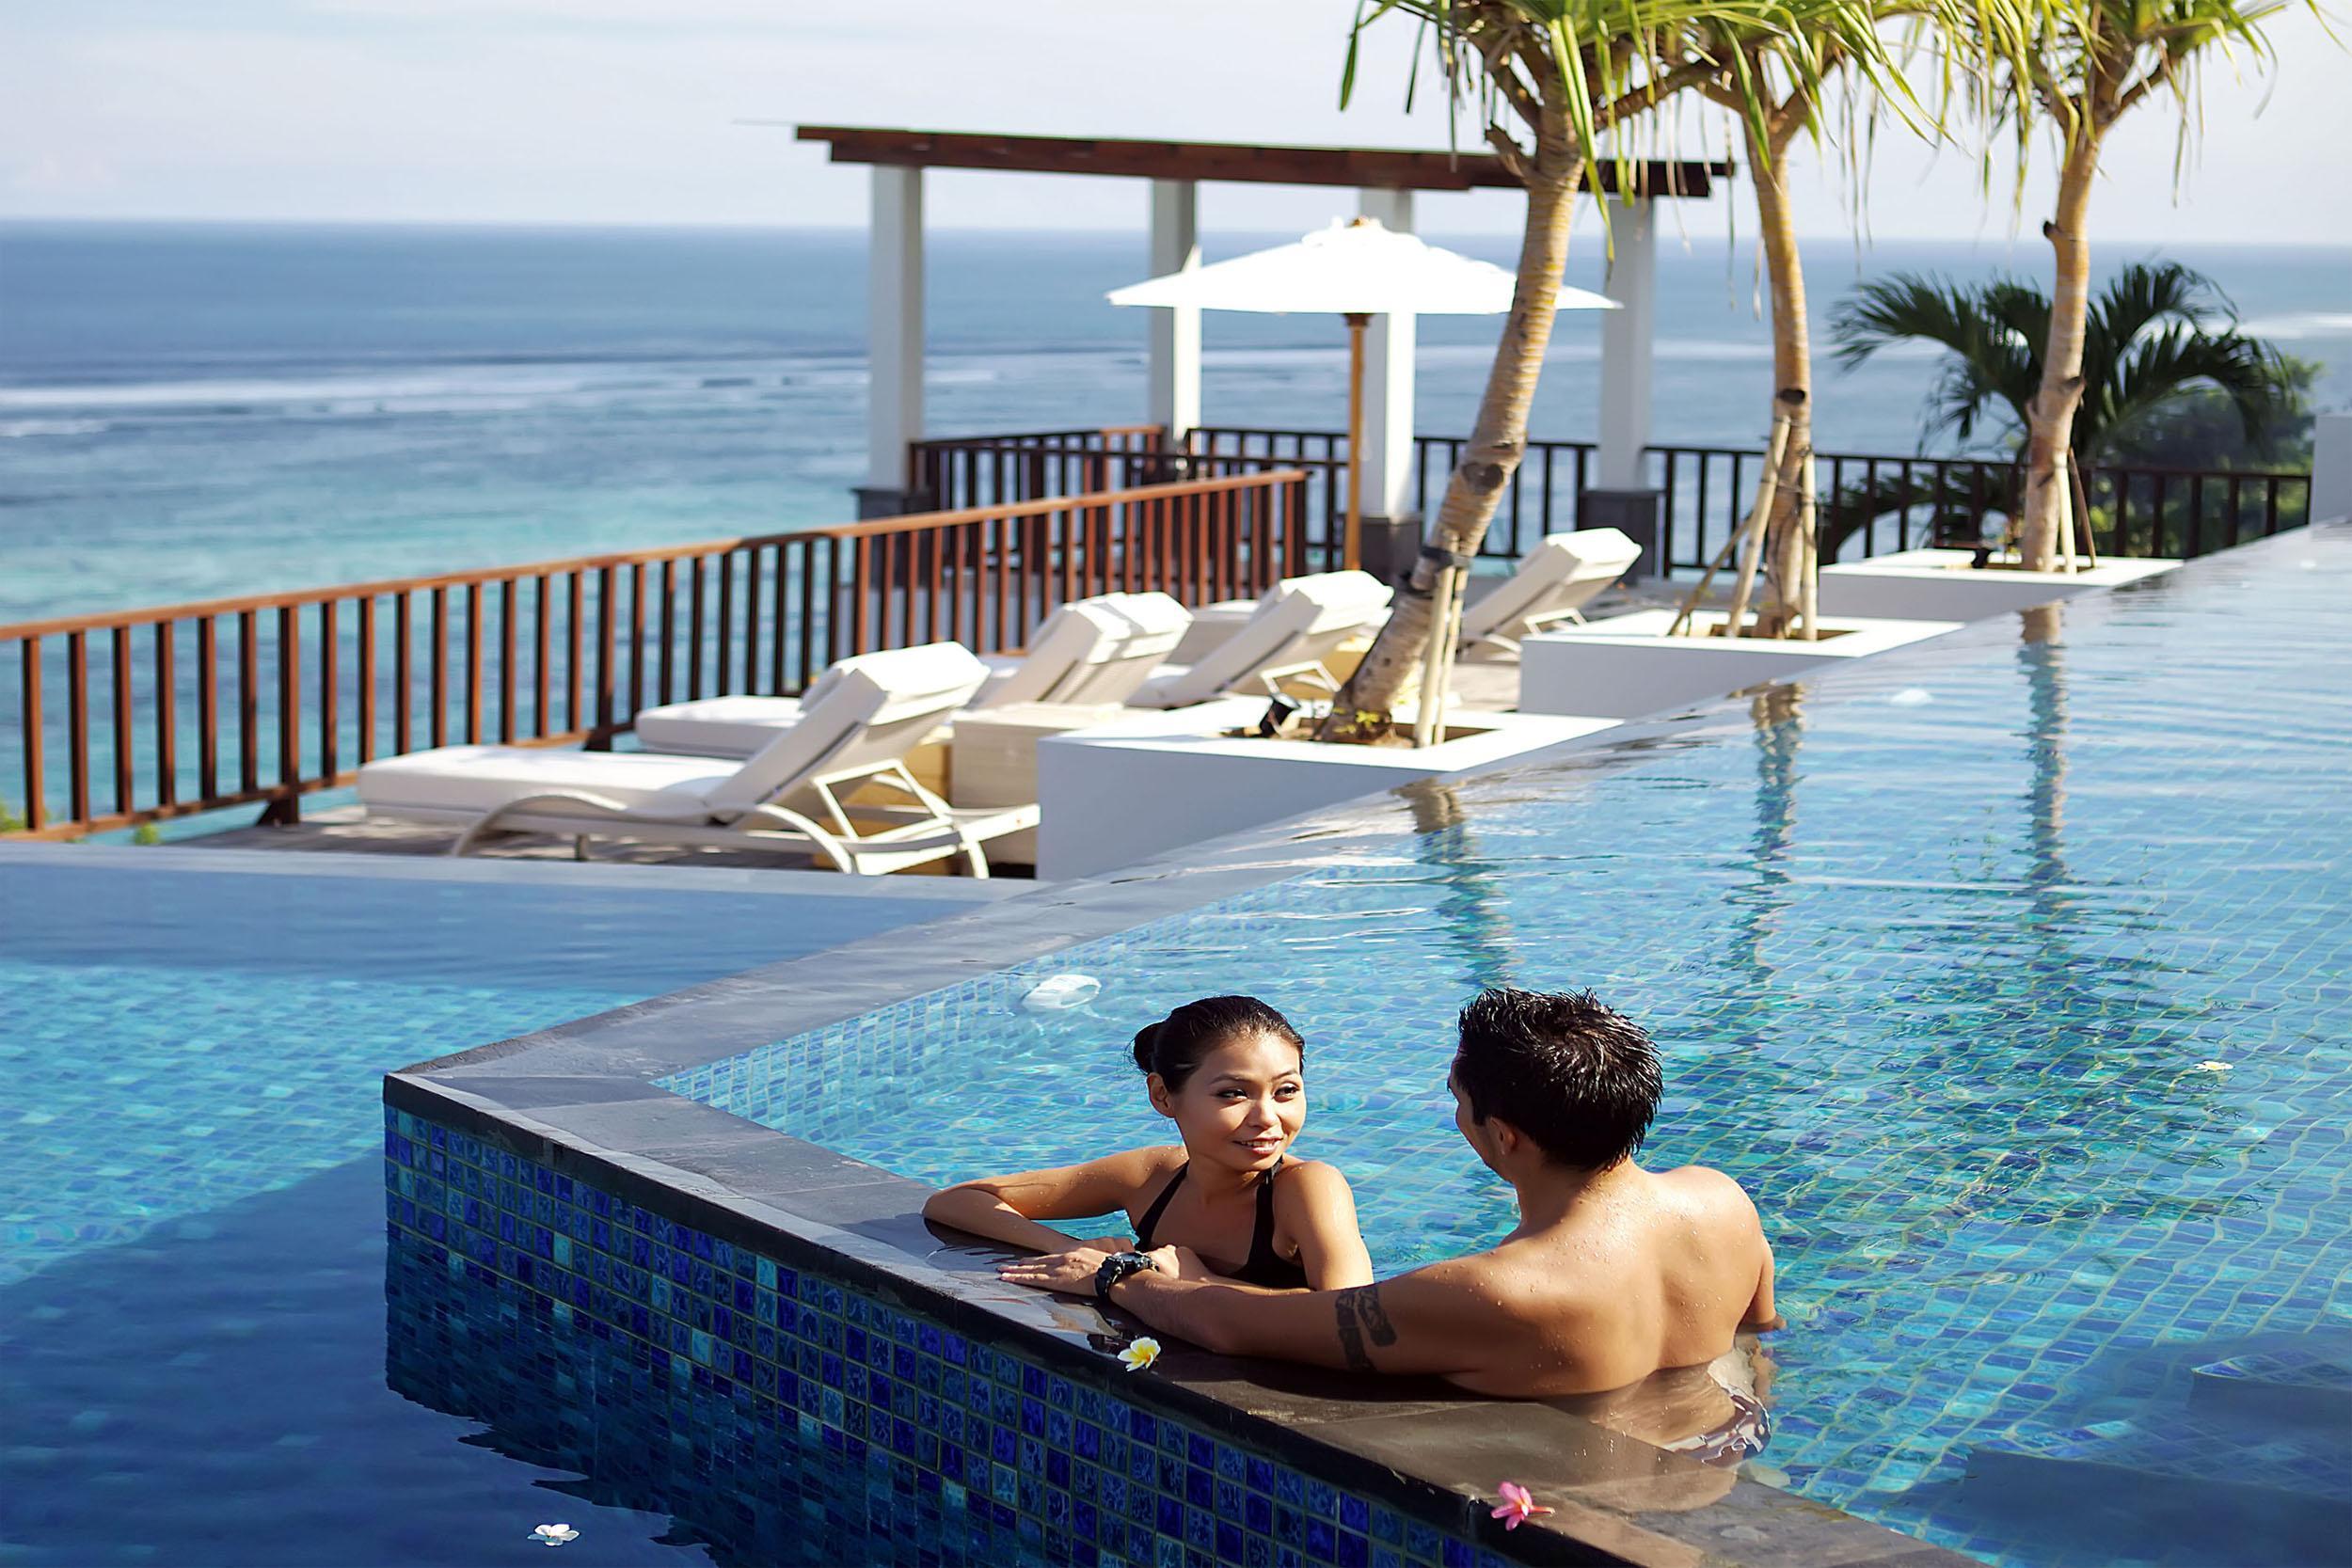 Samabe Bali Suites & Villas